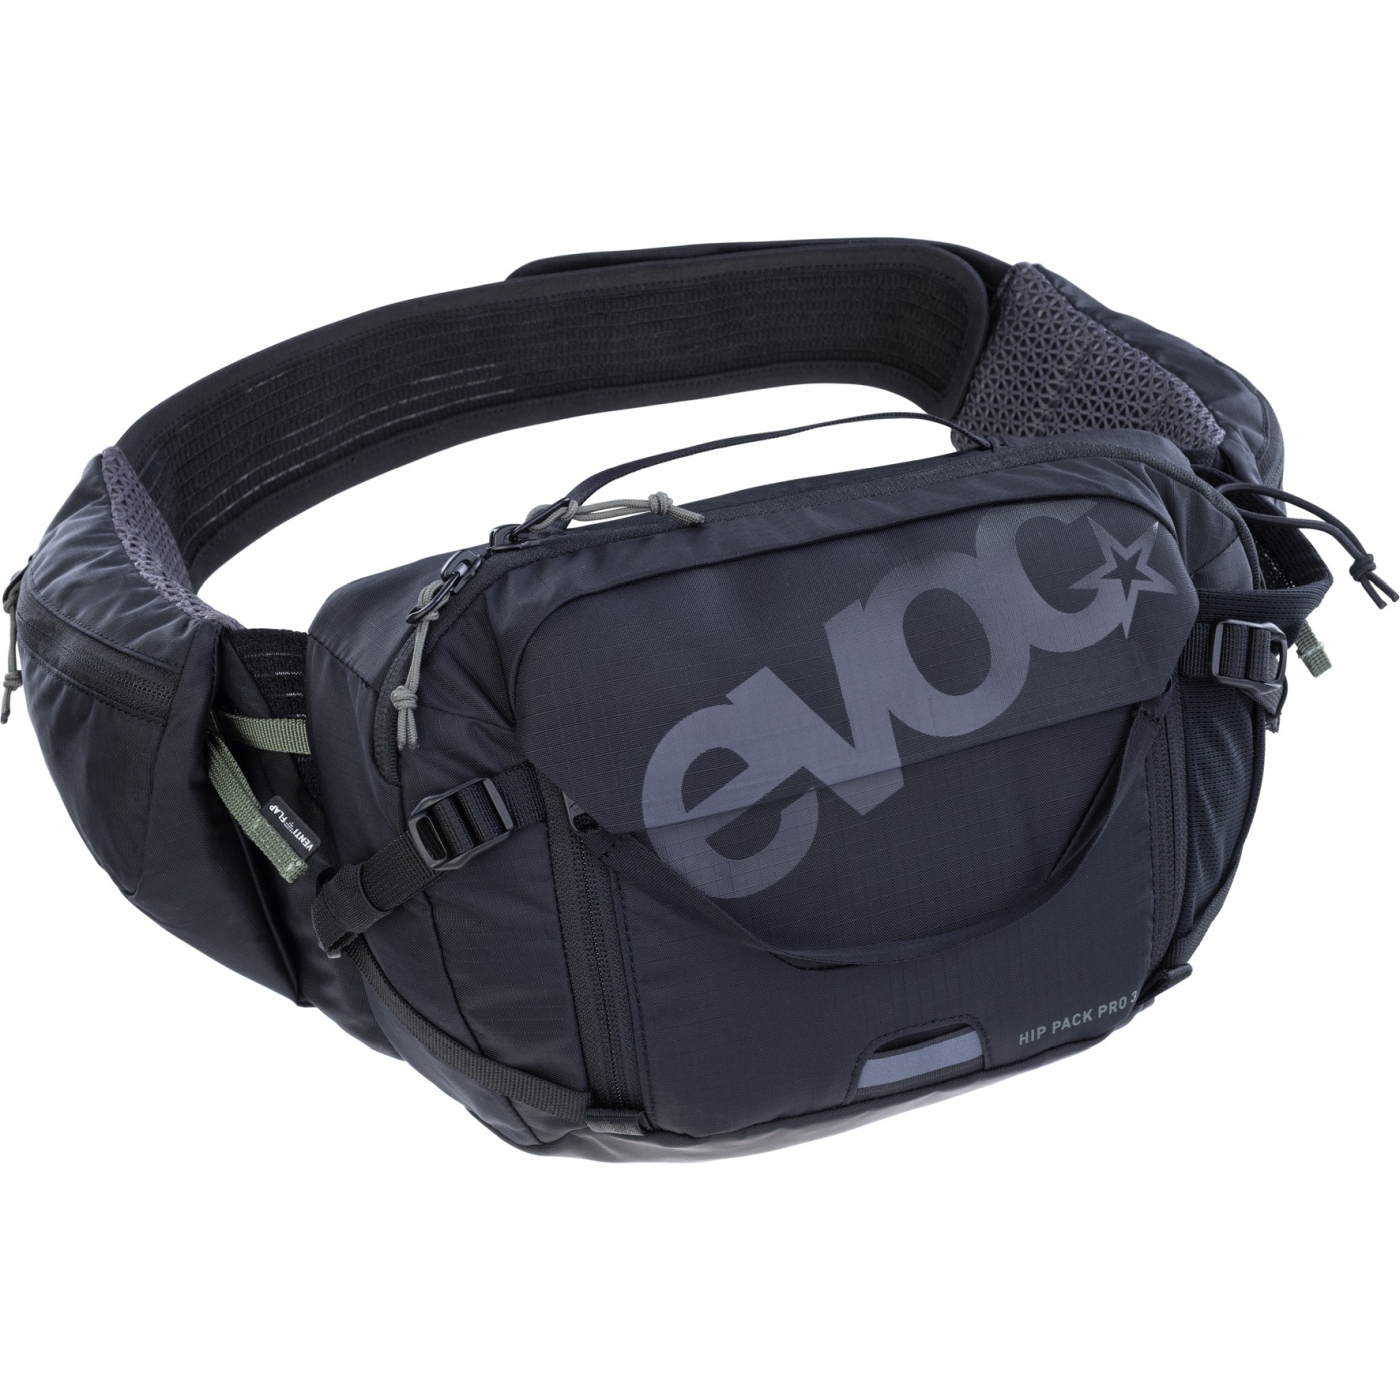 Productfoto van EVOC Hip Pack Pro 3 L Heuptas + 1.5 L Drinkzak - Zwart